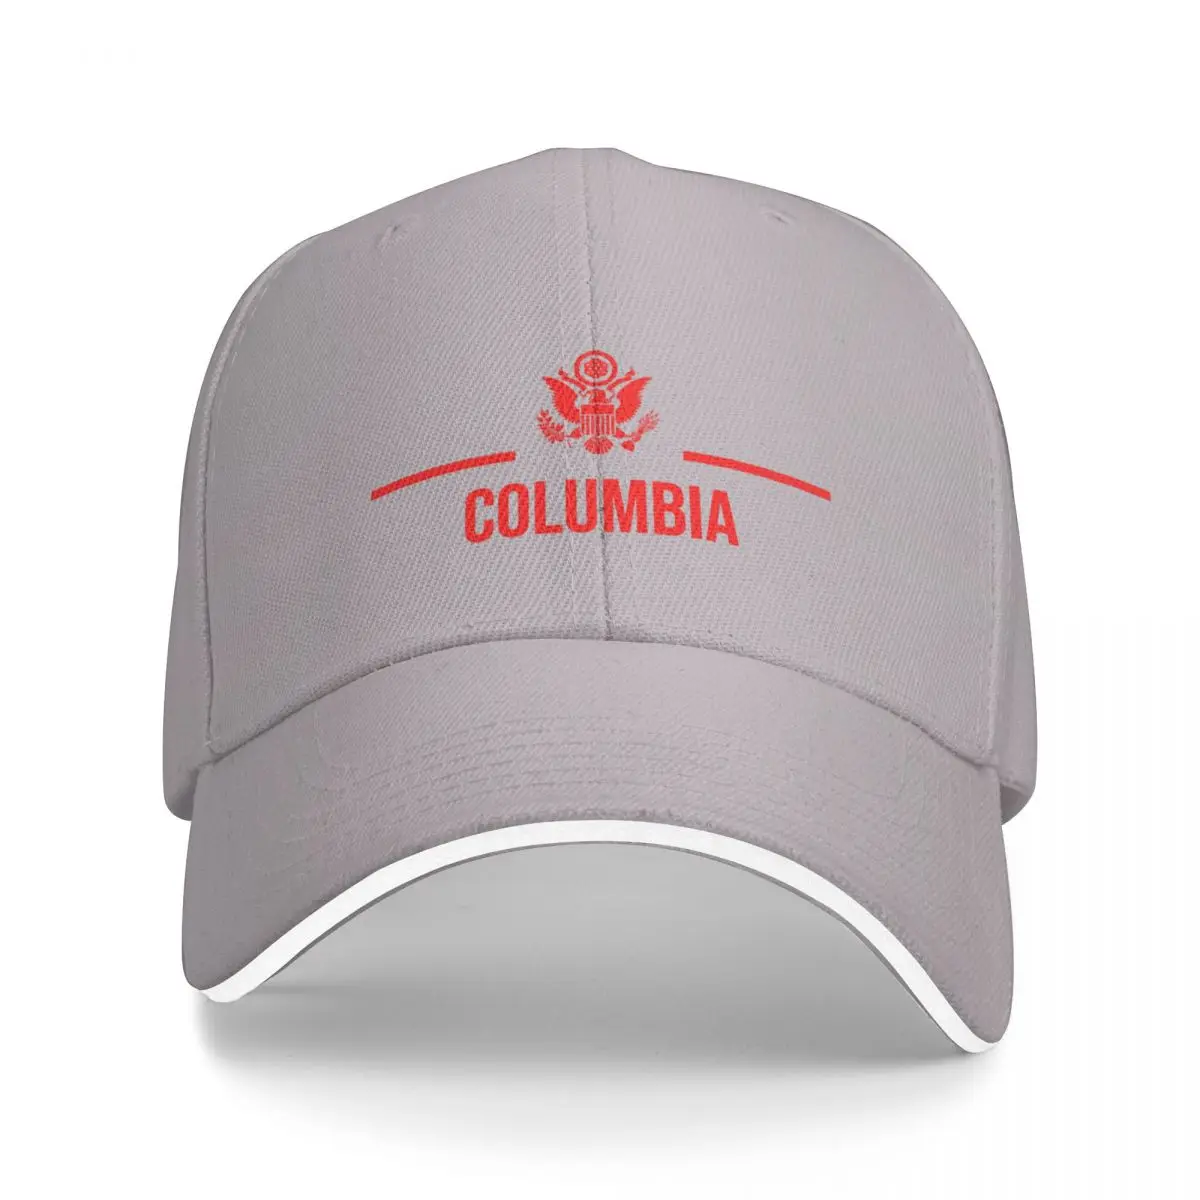 New Columbia Bioshock Baseball Cap New Hat Bobble Hat Thermal Visor Caps  Women Men's - AliExpress